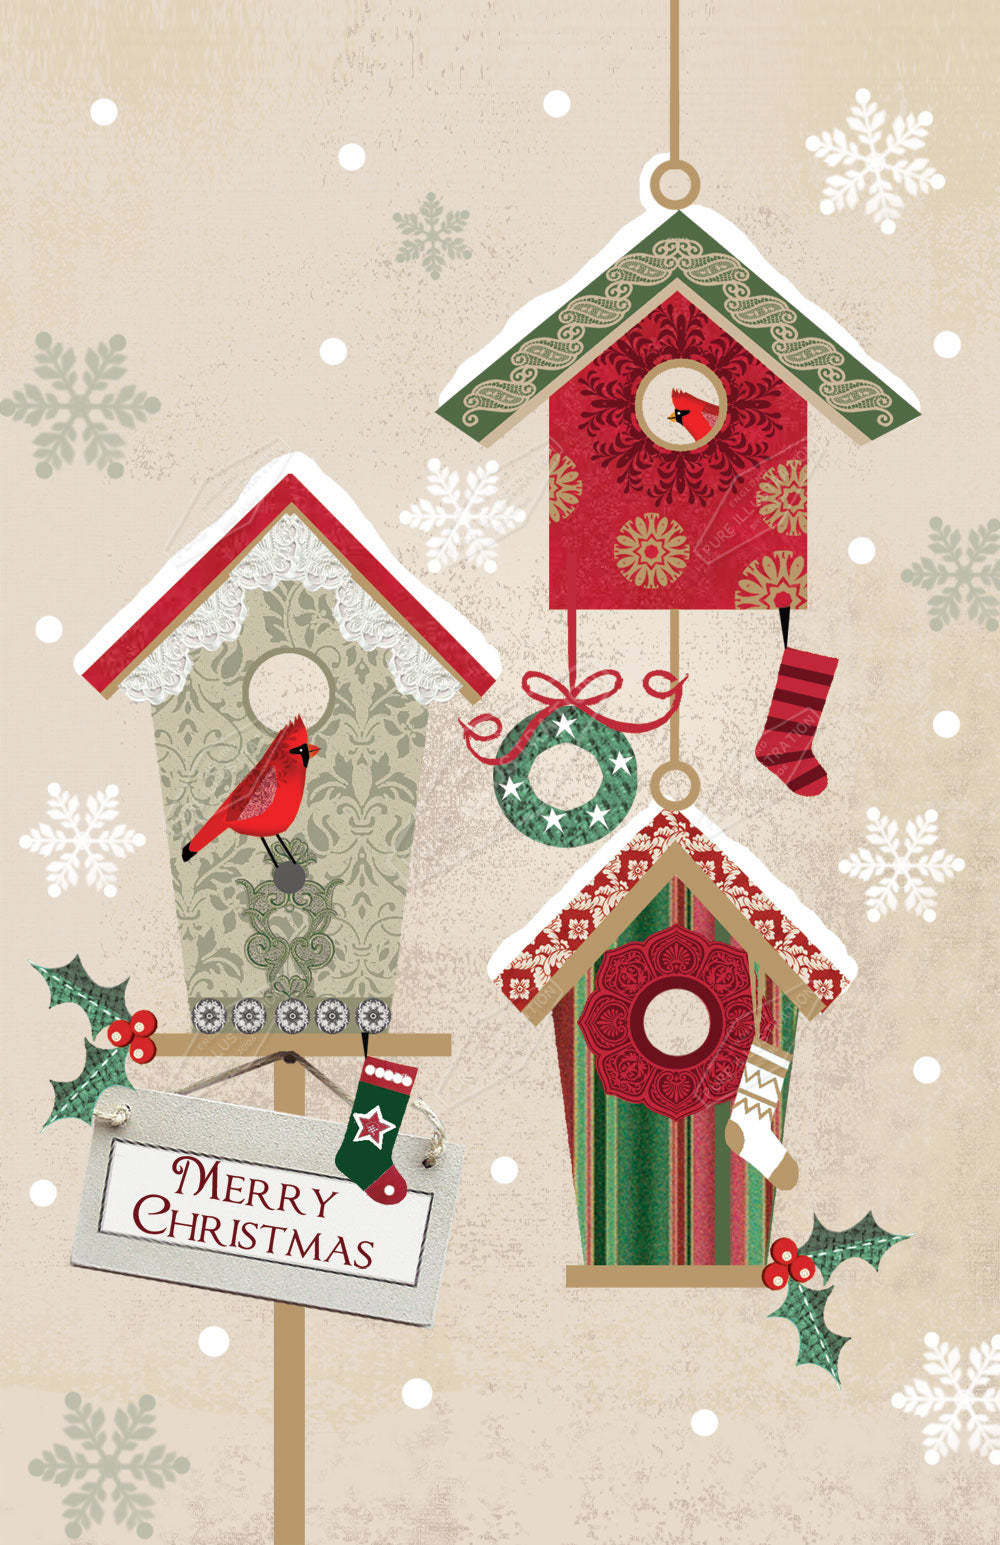 00023295DEVa - Deva Evans is represented by Pure Art Licensing Agency - Christmas Greeting Card Design